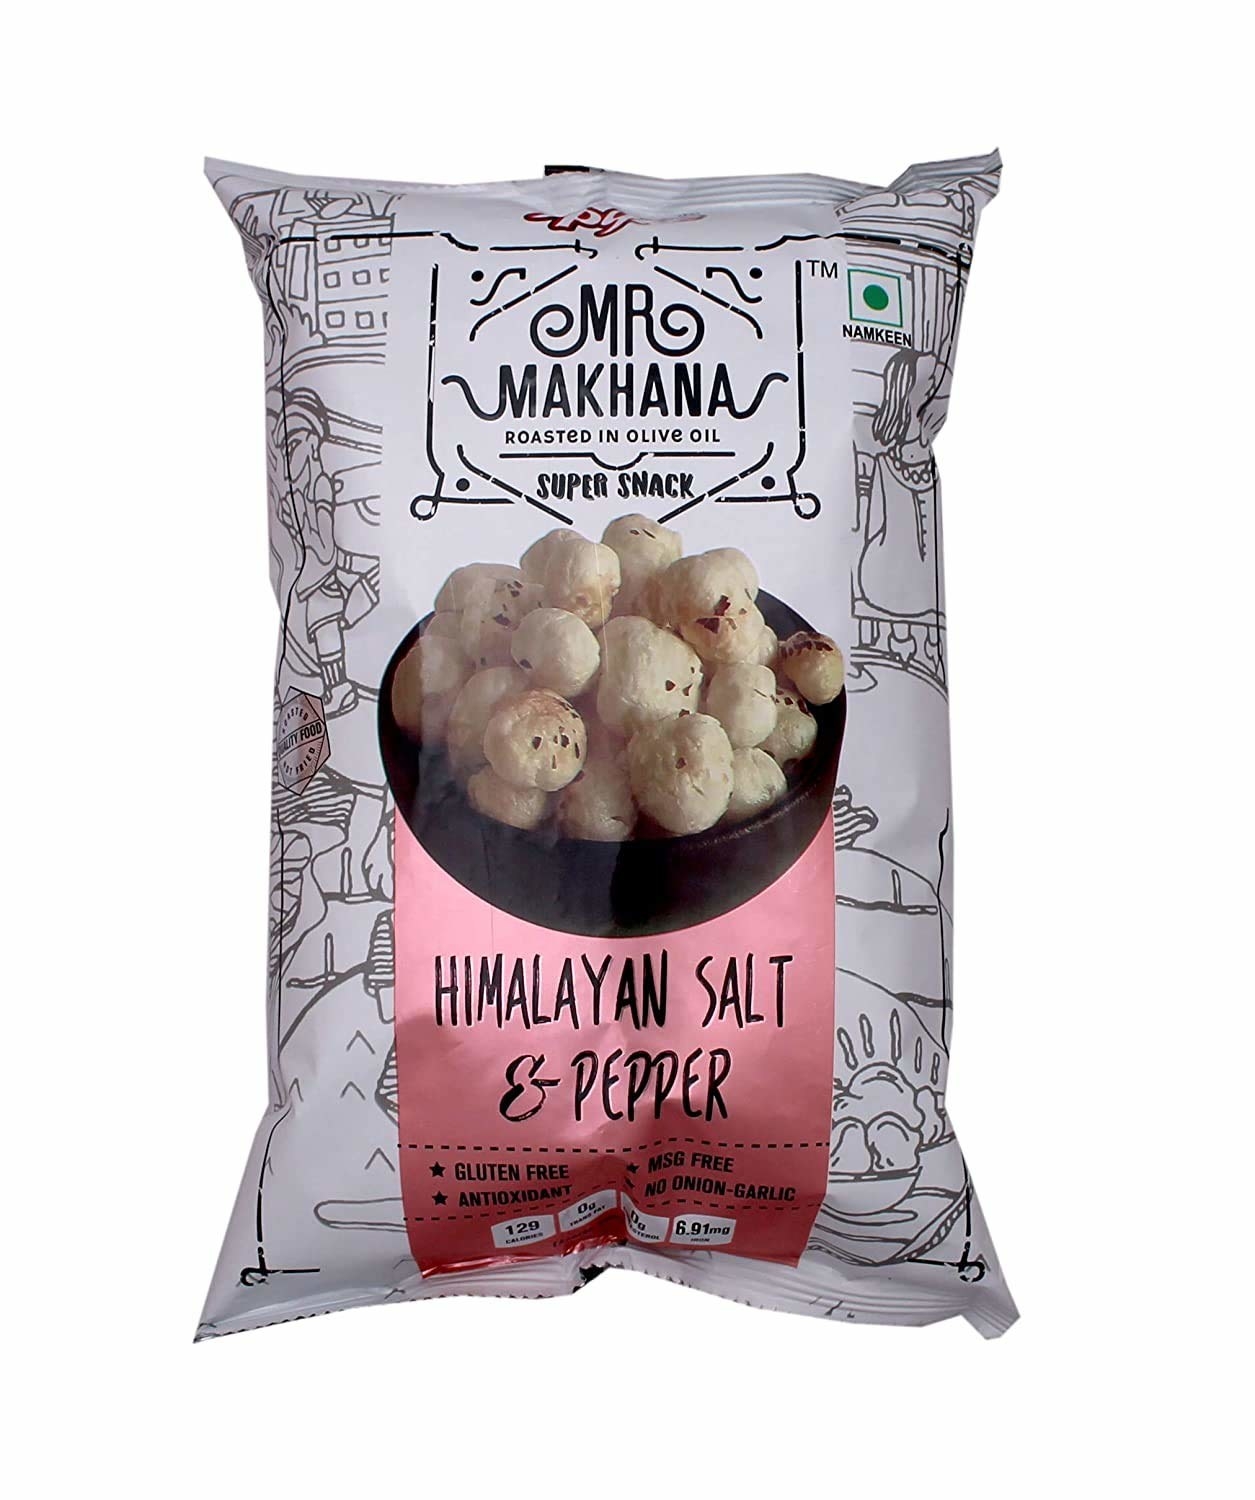 Packaging of the salt and pepper makhanas